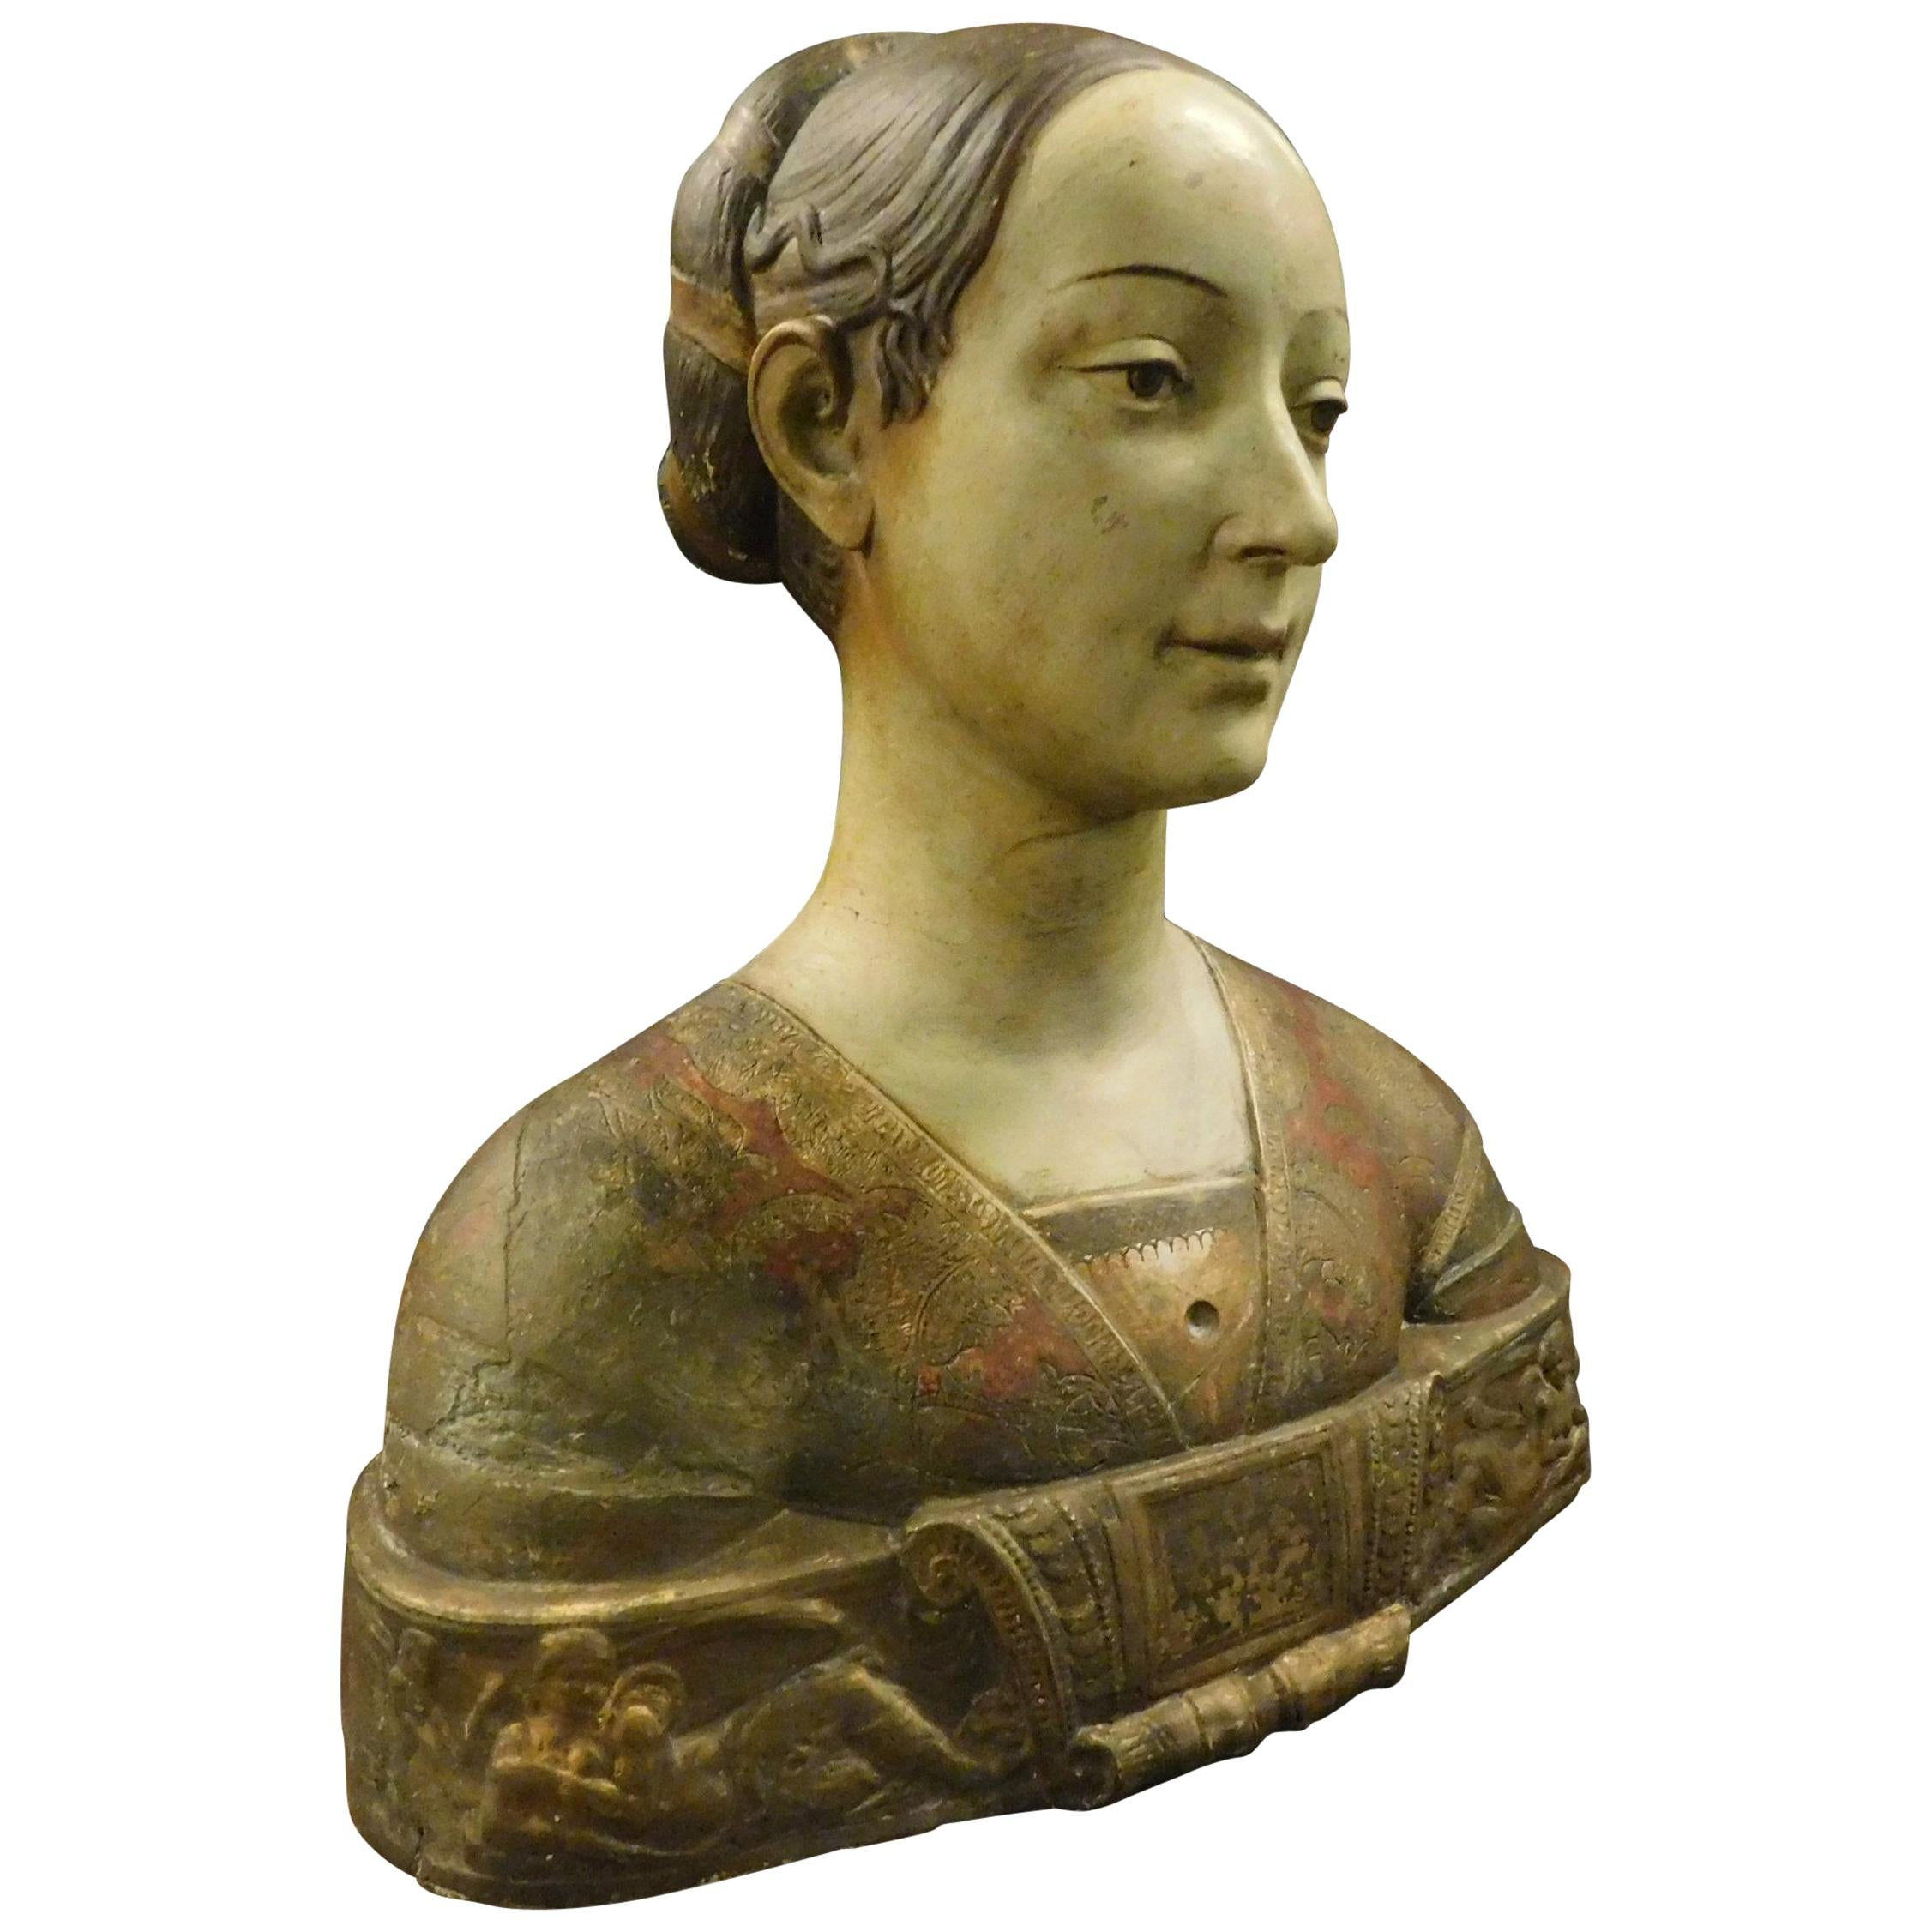 Antique Bust of a Florentine Noblewoman Terracotta Sculpture Statue, 1800 Italy